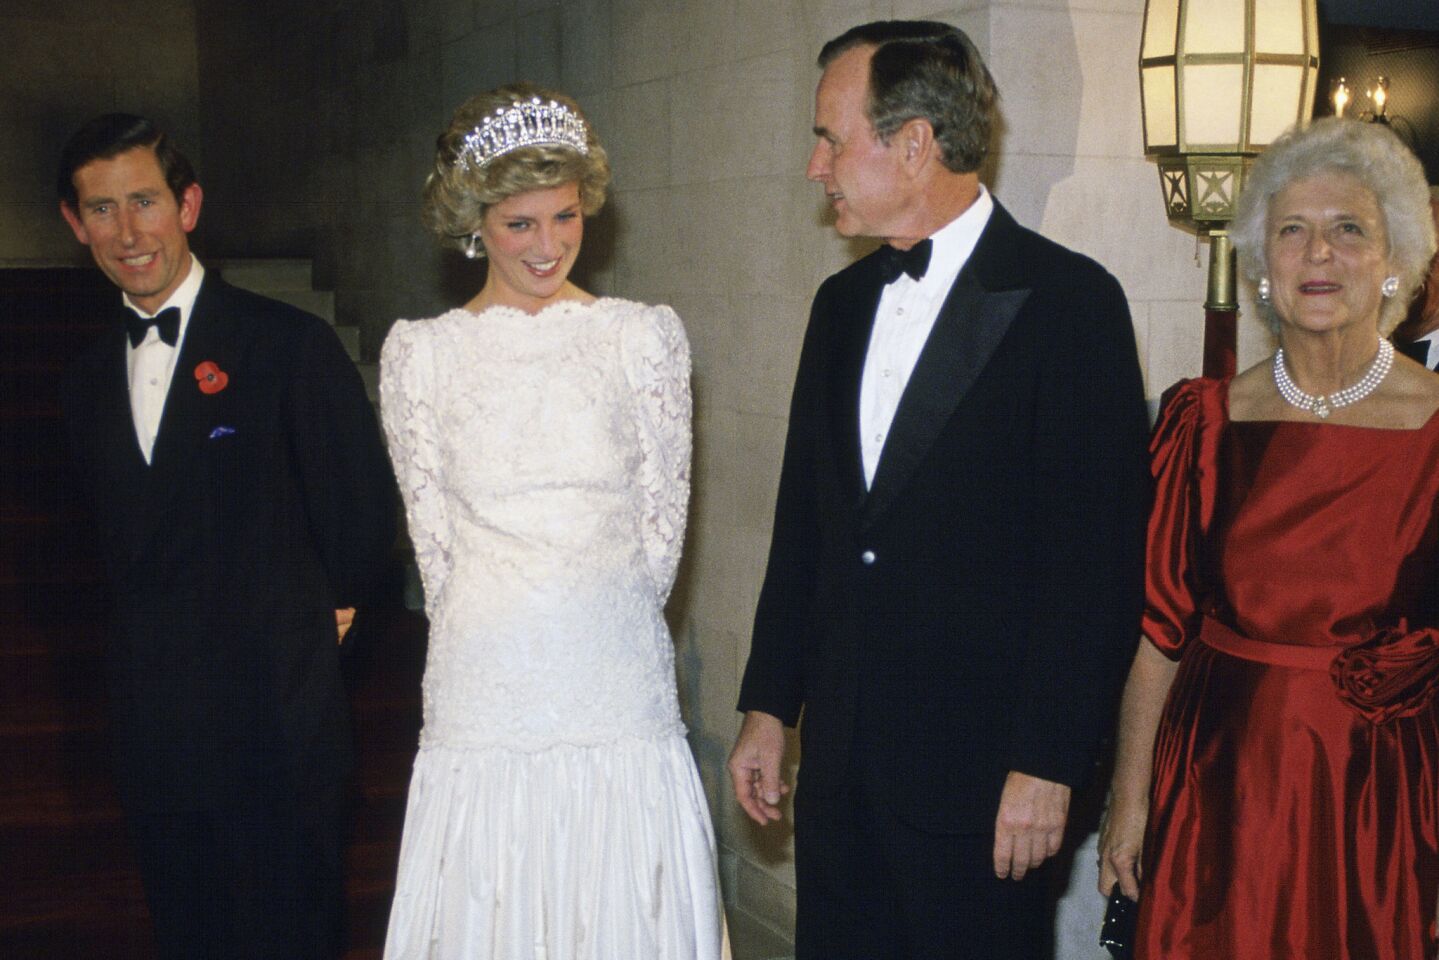 Prince Charles and Princess Diana meet Vice President George H.W. Bush and Barbara Bush at the British ambassador's residence in Washington in 1985.